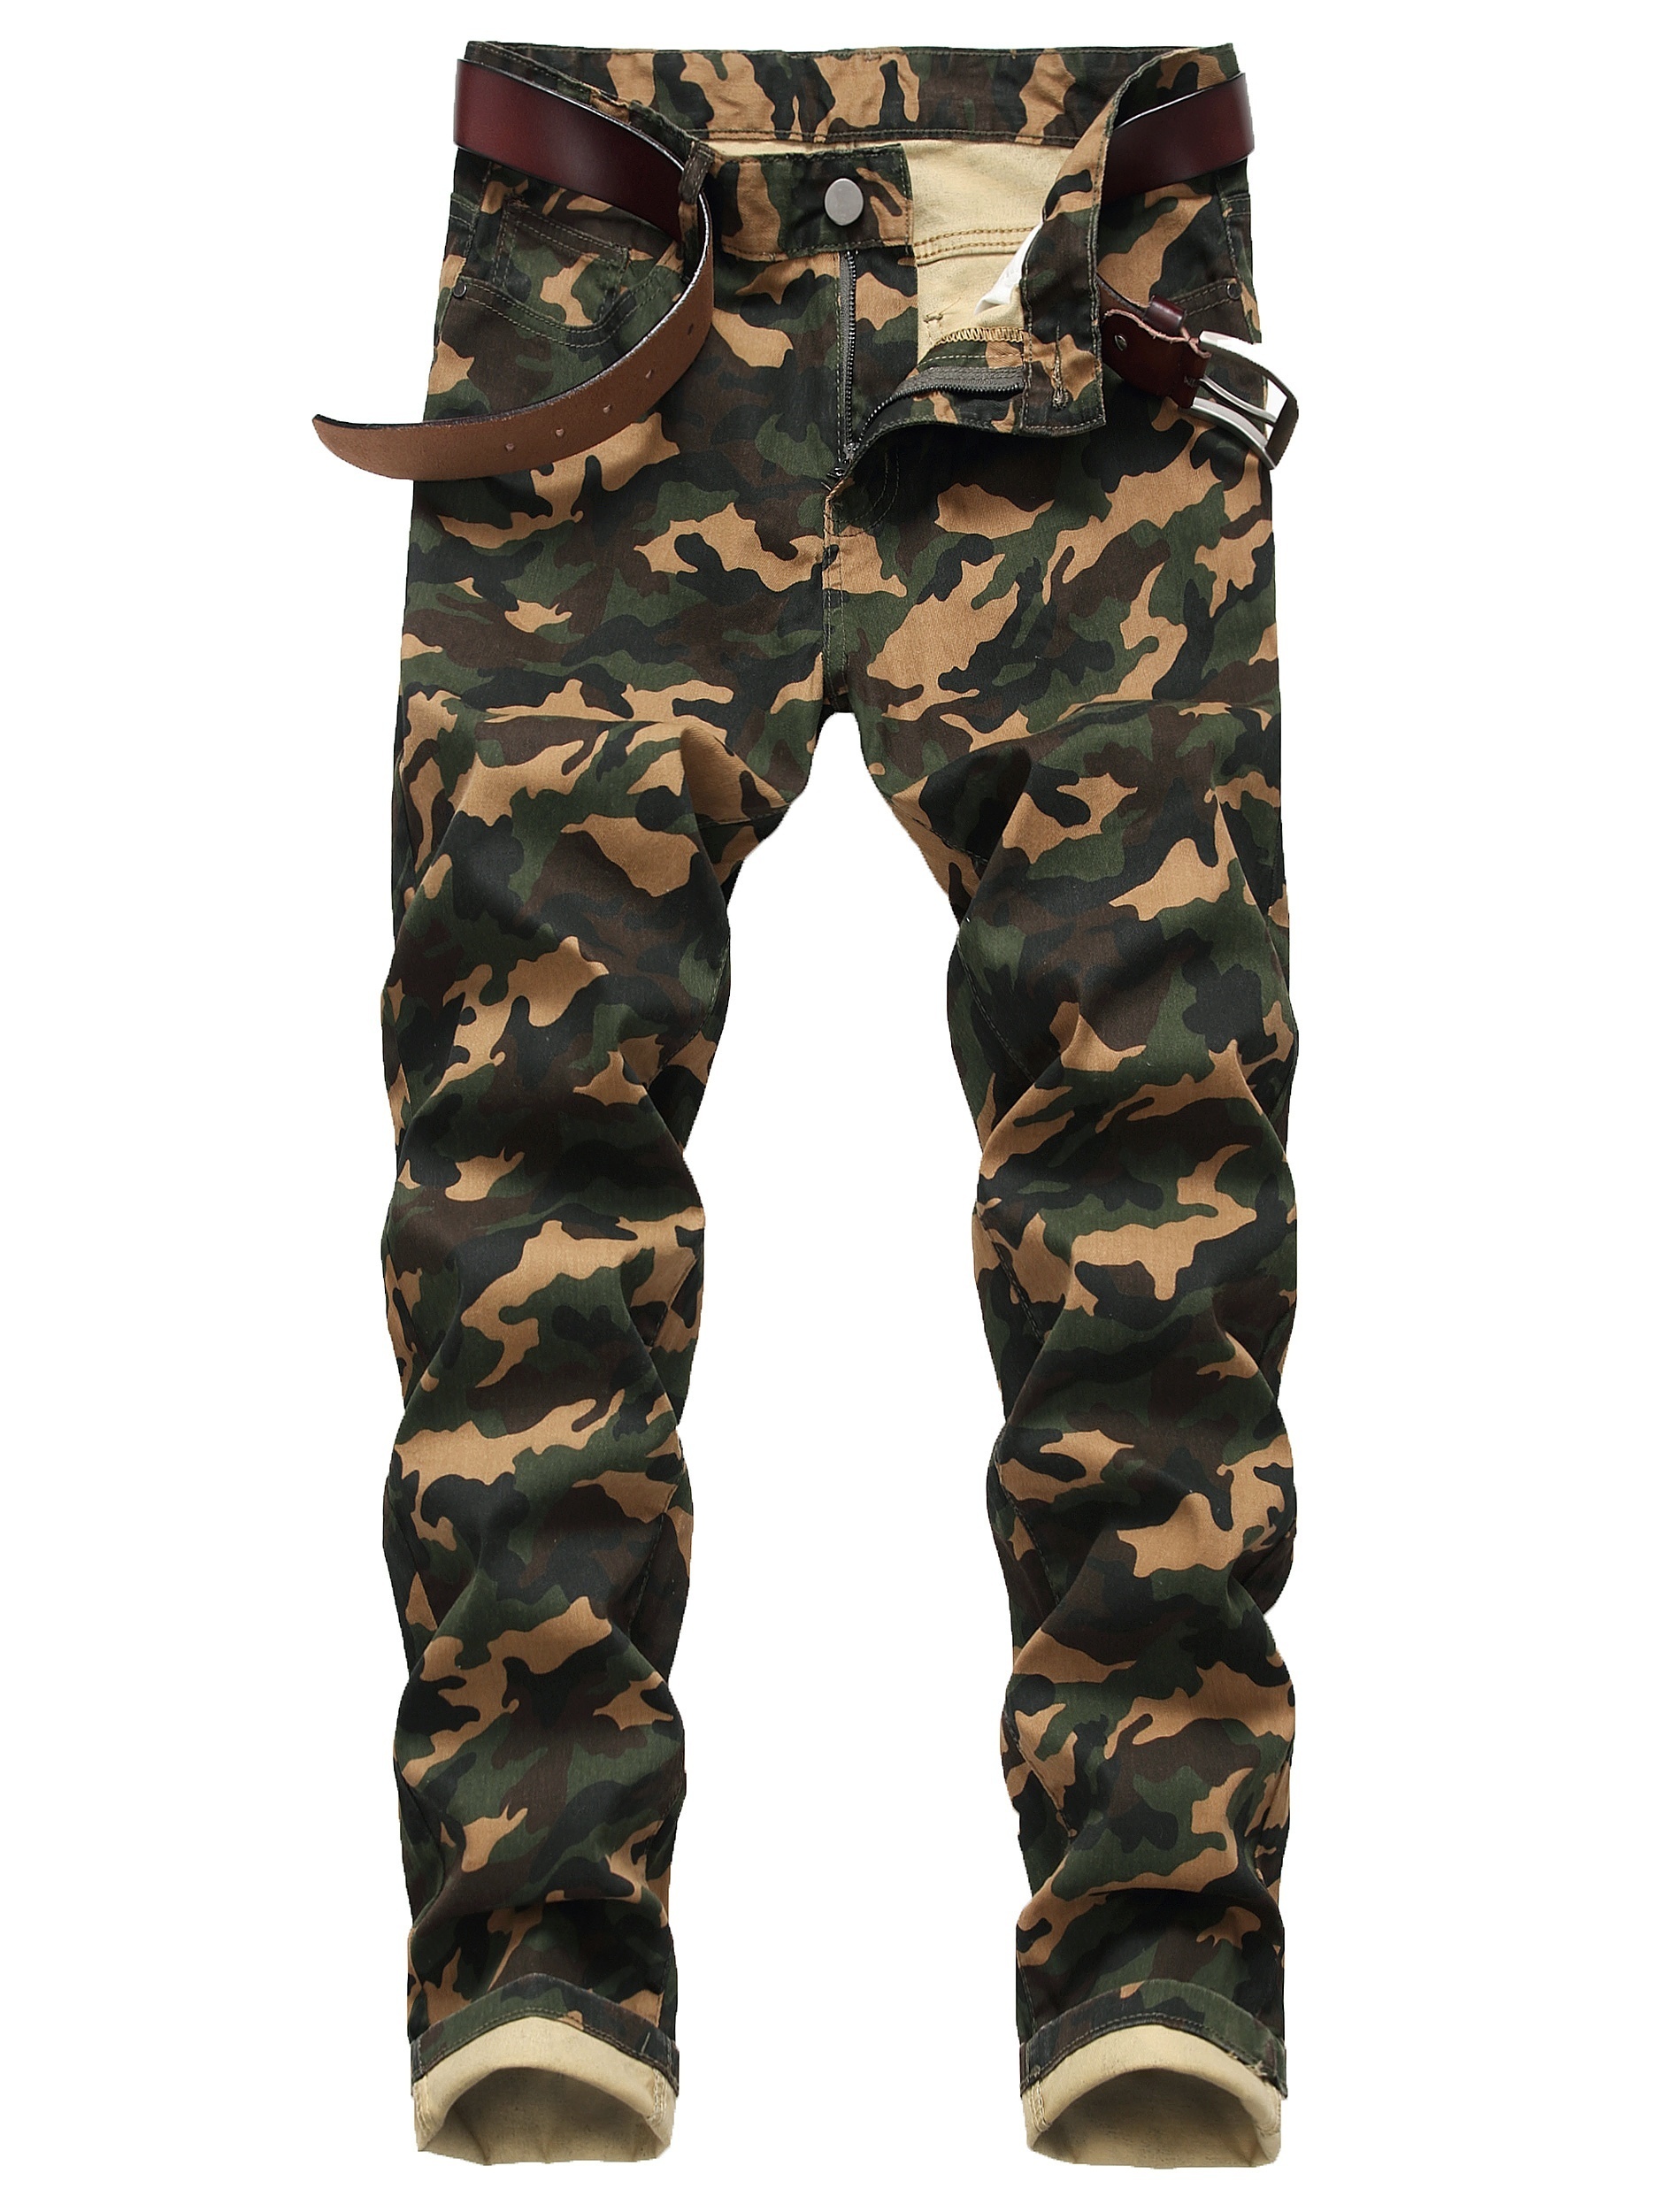 Eddie Bauer GUIDE PRO SLIM FIT - Outdoor trousers - camouflage/multi-coloured  - Zalando.de